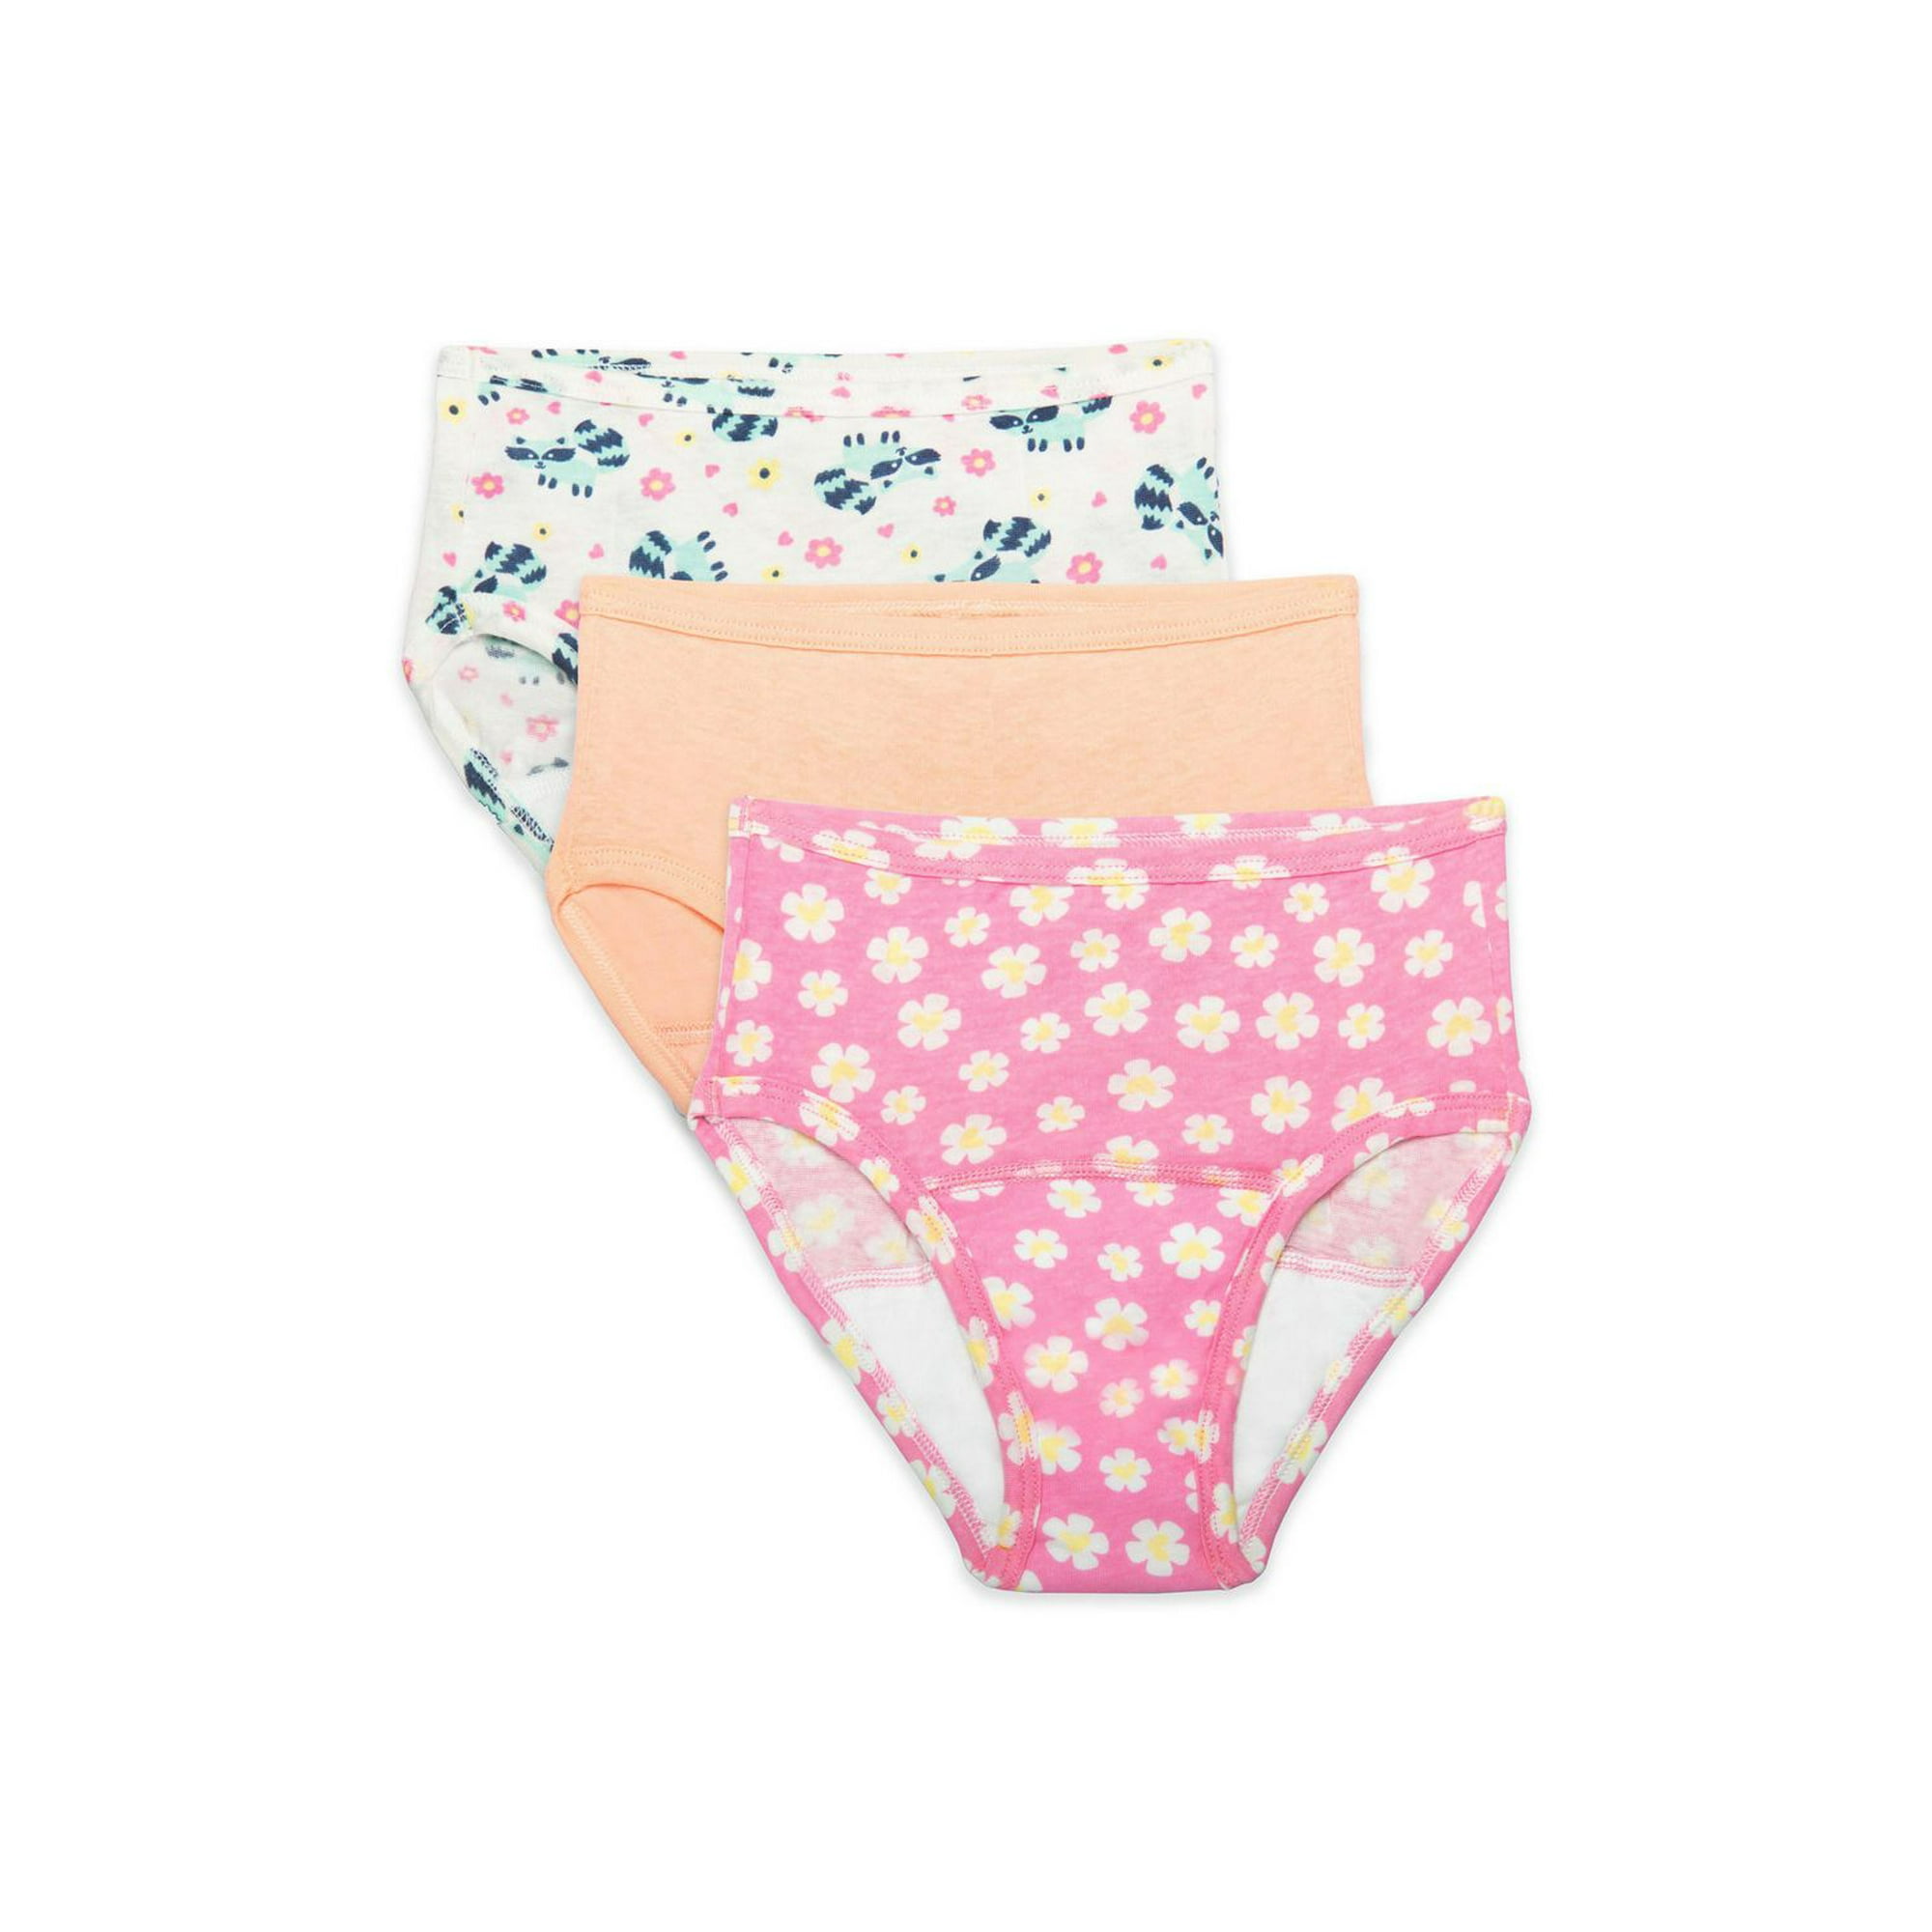 5 Pcs/lot Girls Underwear Cotton Panties For Children New Cute Cat